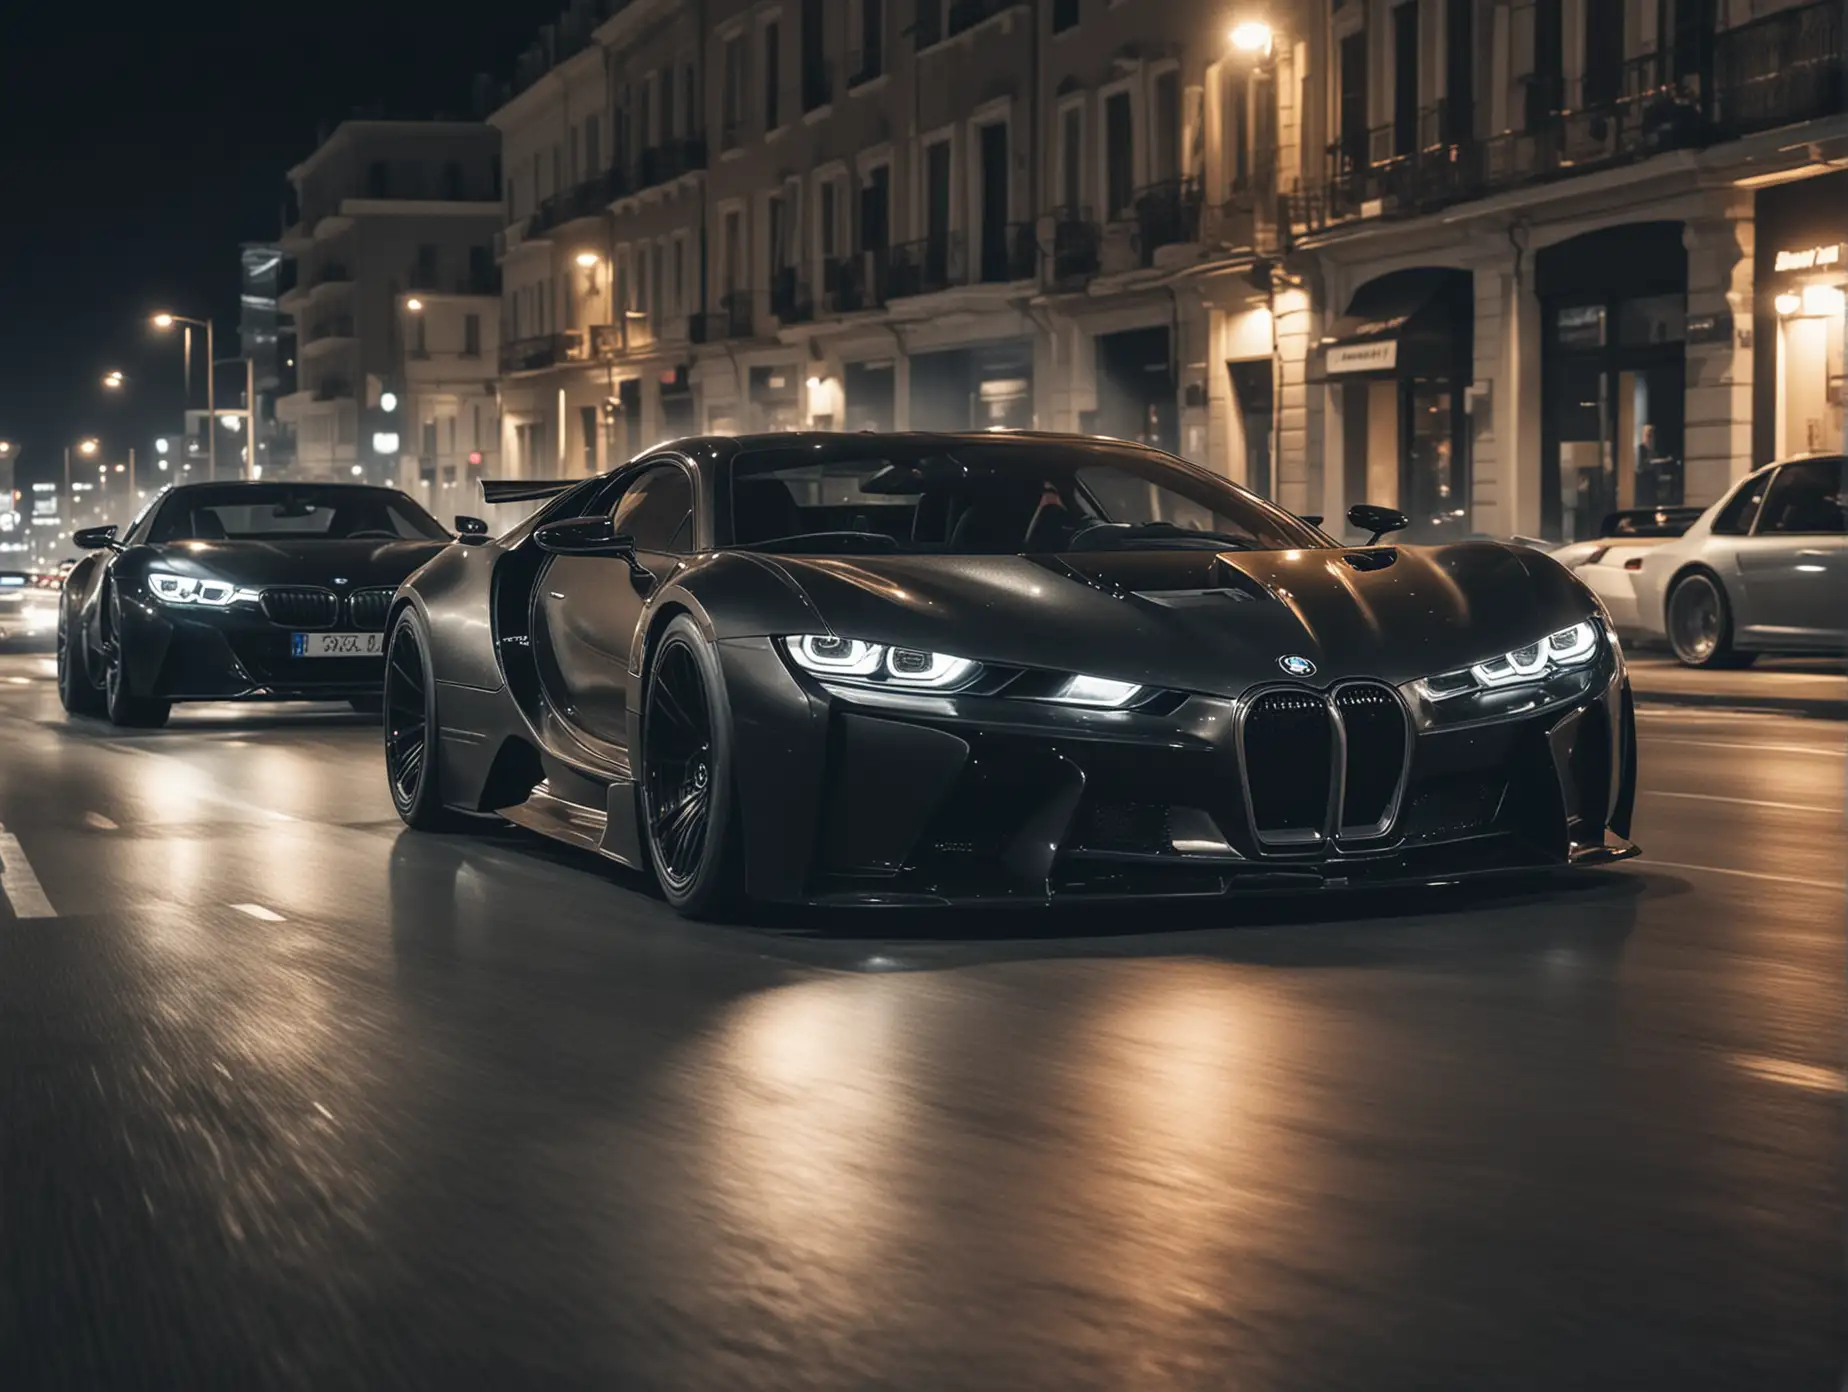 Nighttime-Street-Racing-Tuned-BMW-and-Bugatti-Drifting-in-Black-Atmosphere